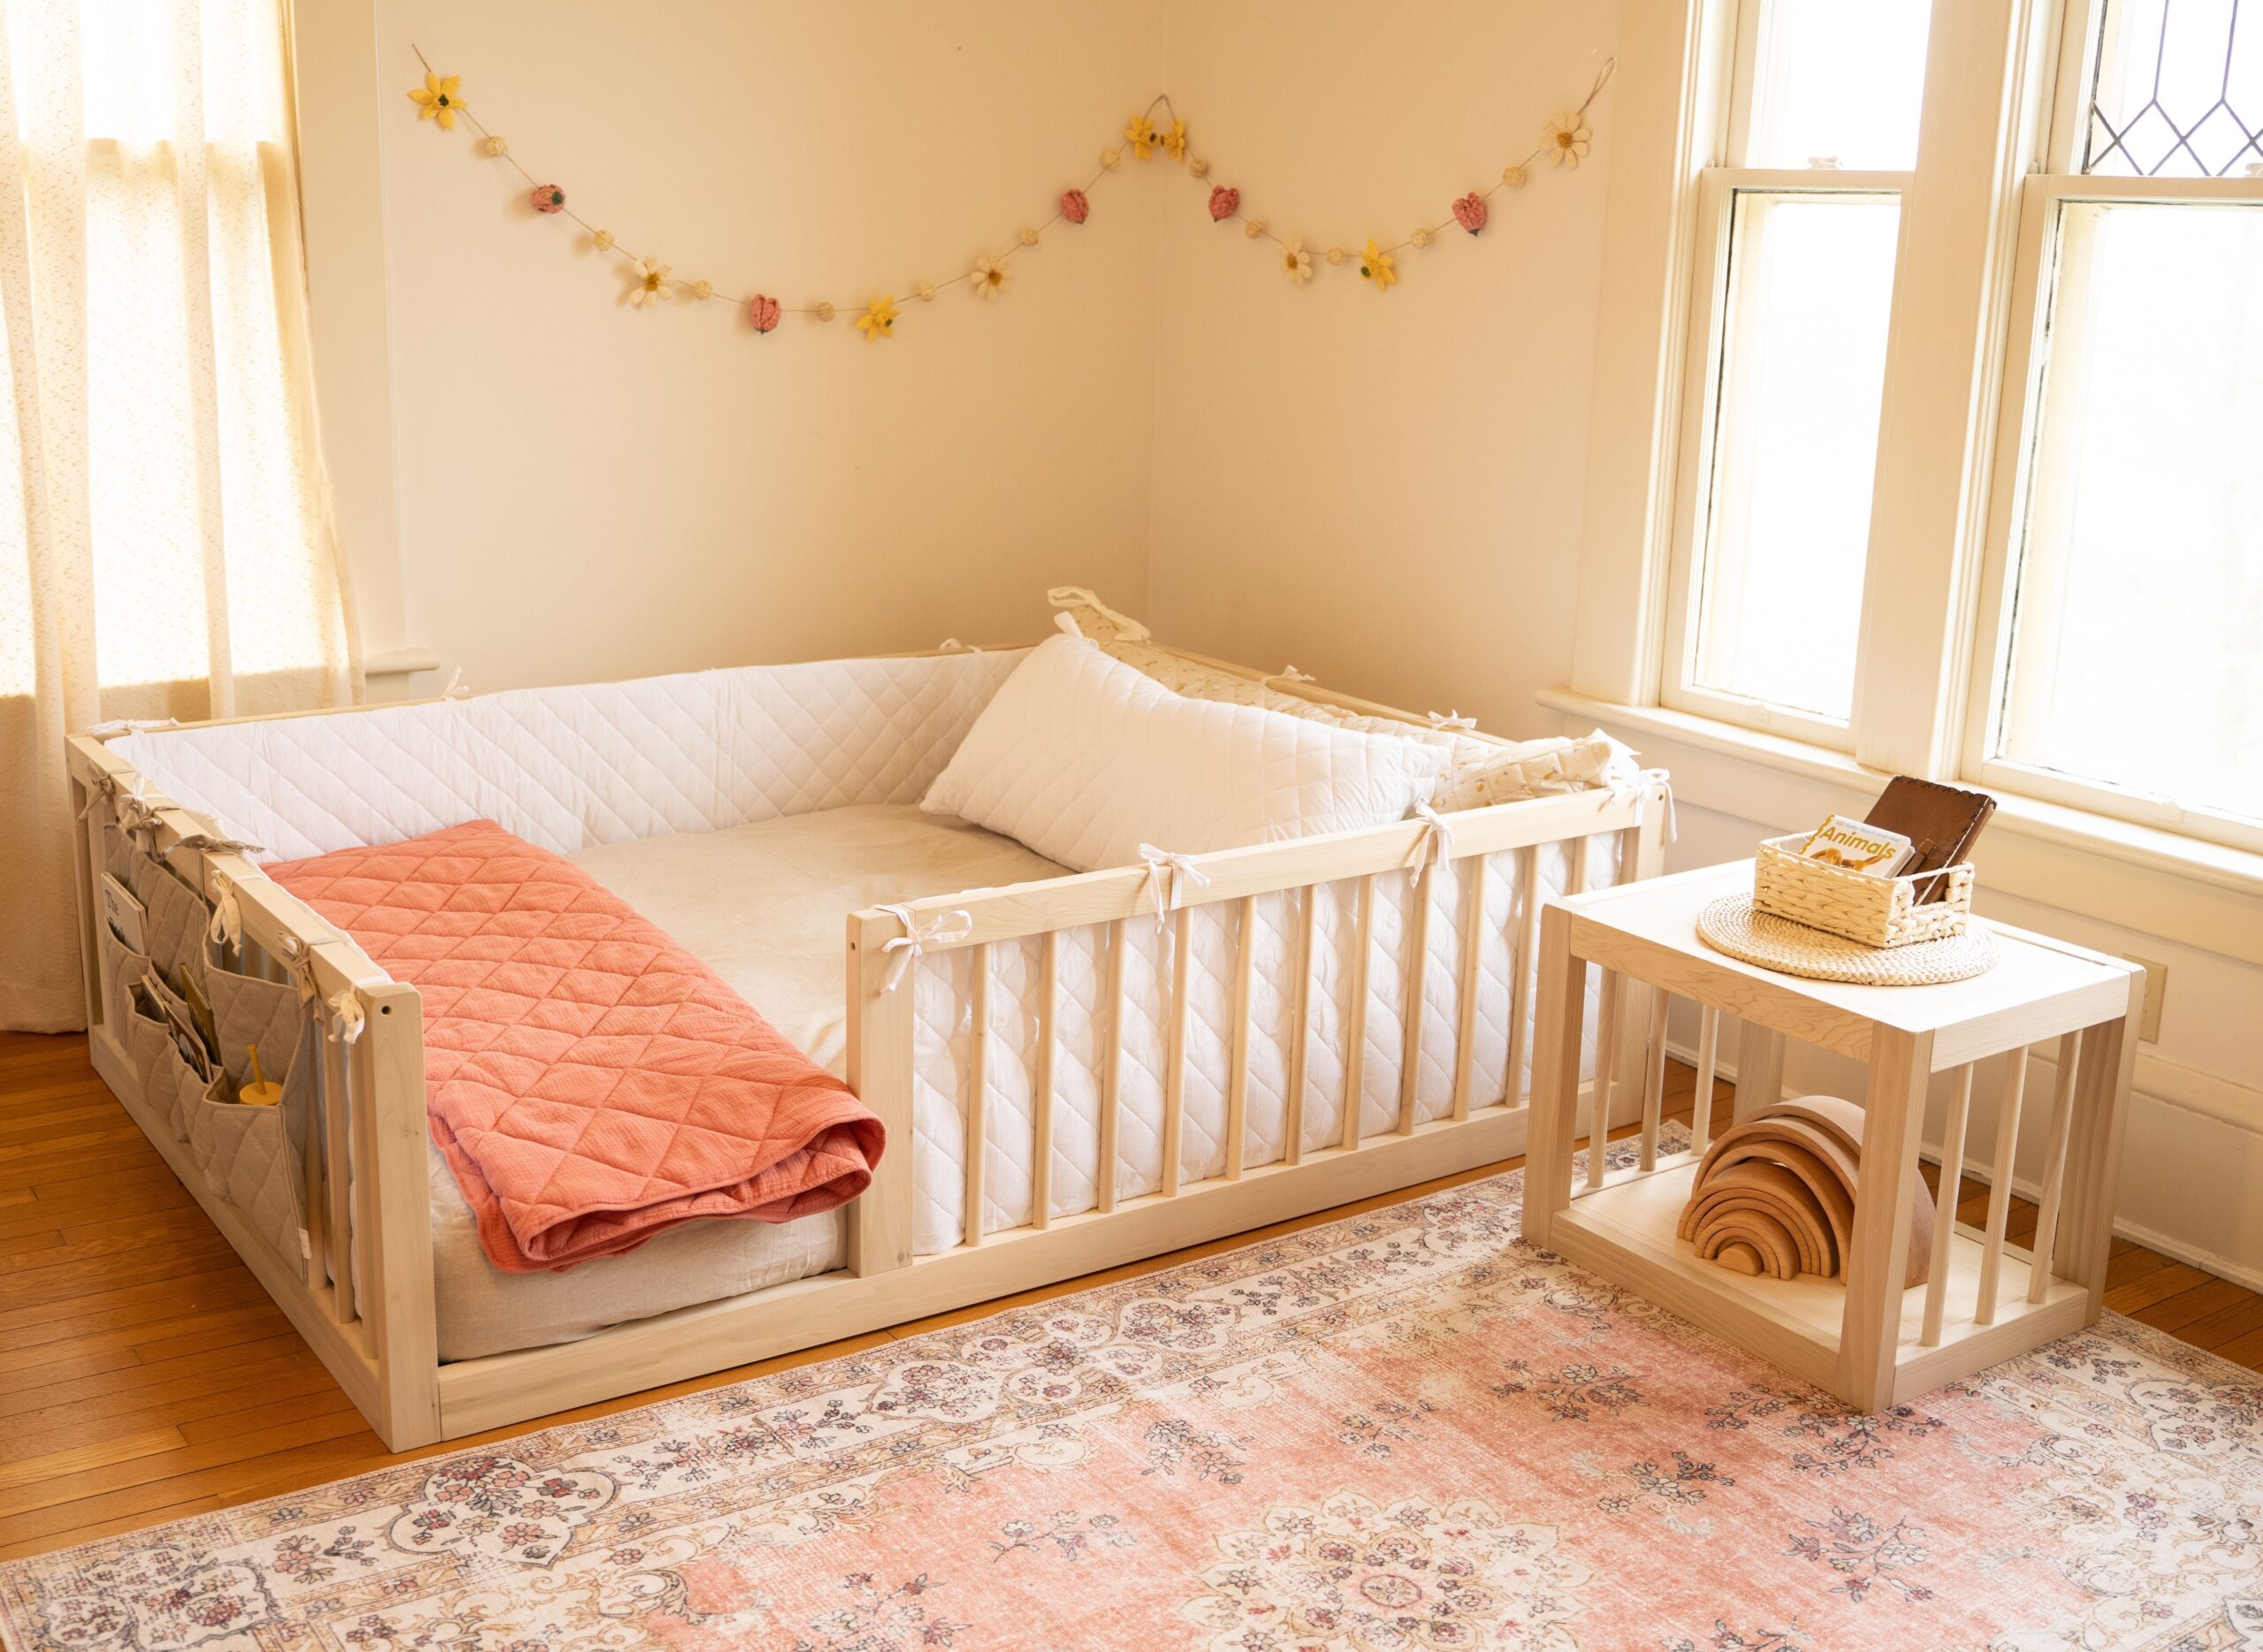 Why Montessori Floor Bed